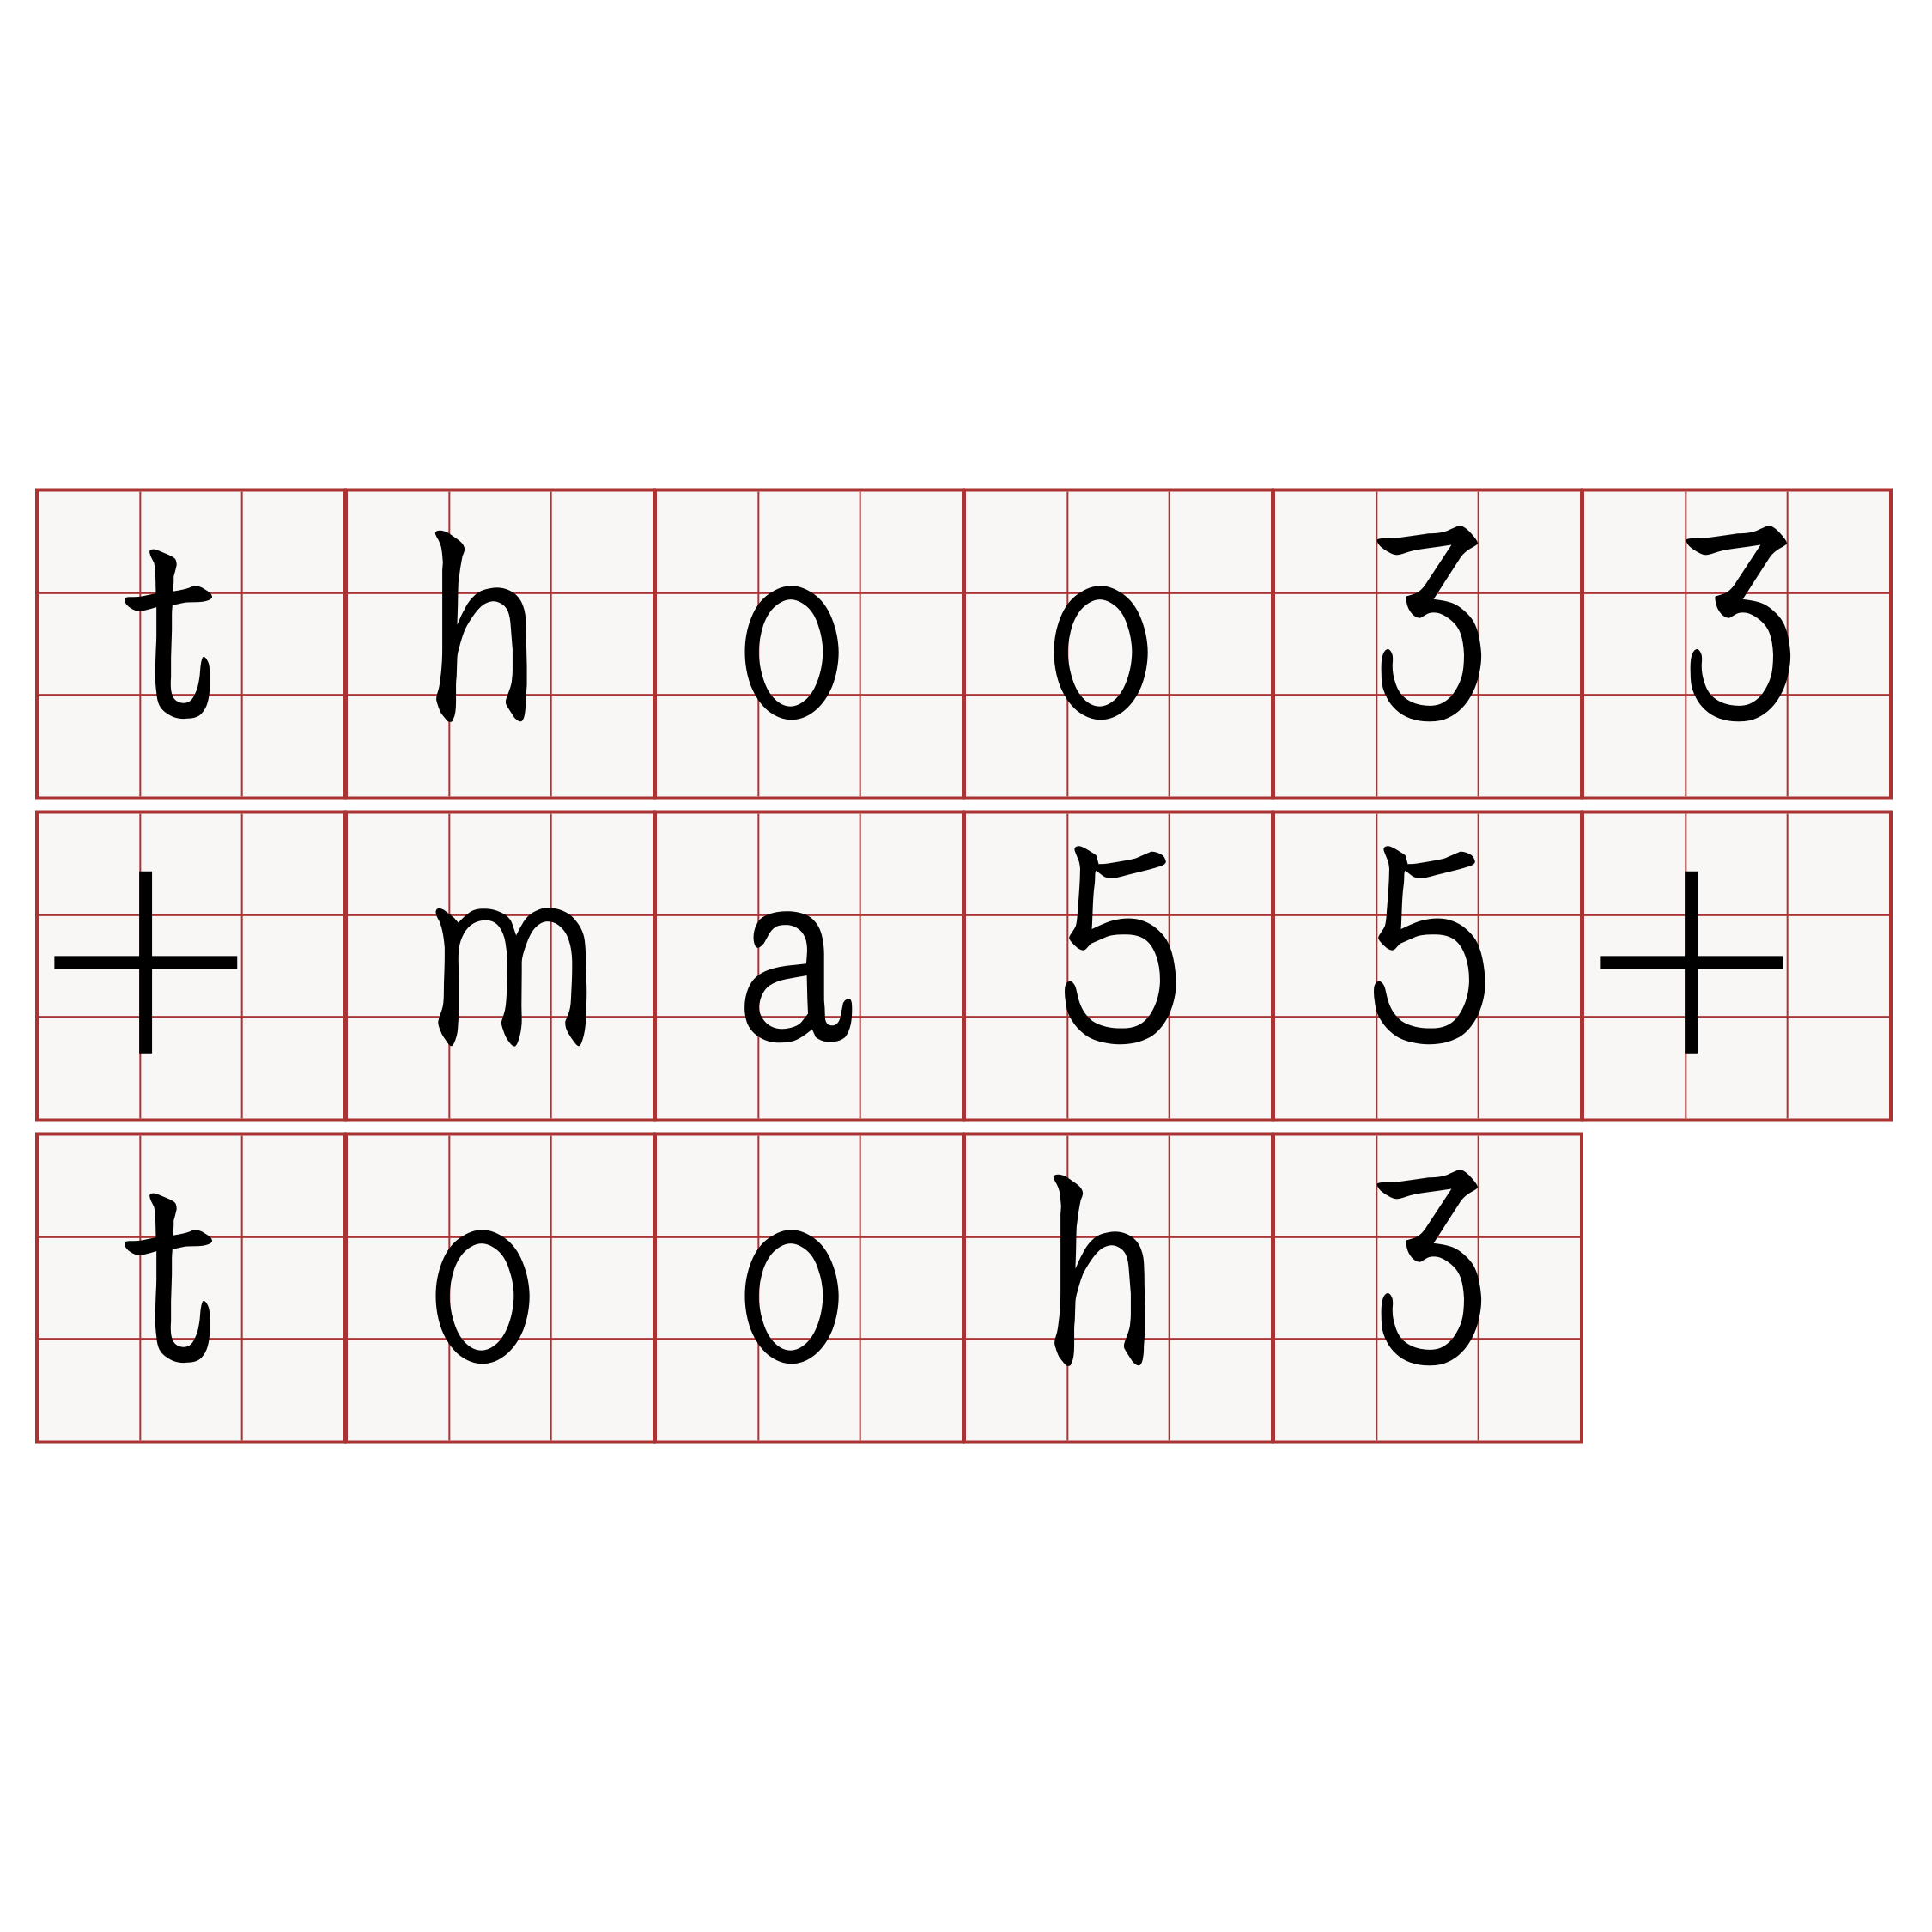 thoo33+ma55+tooh3